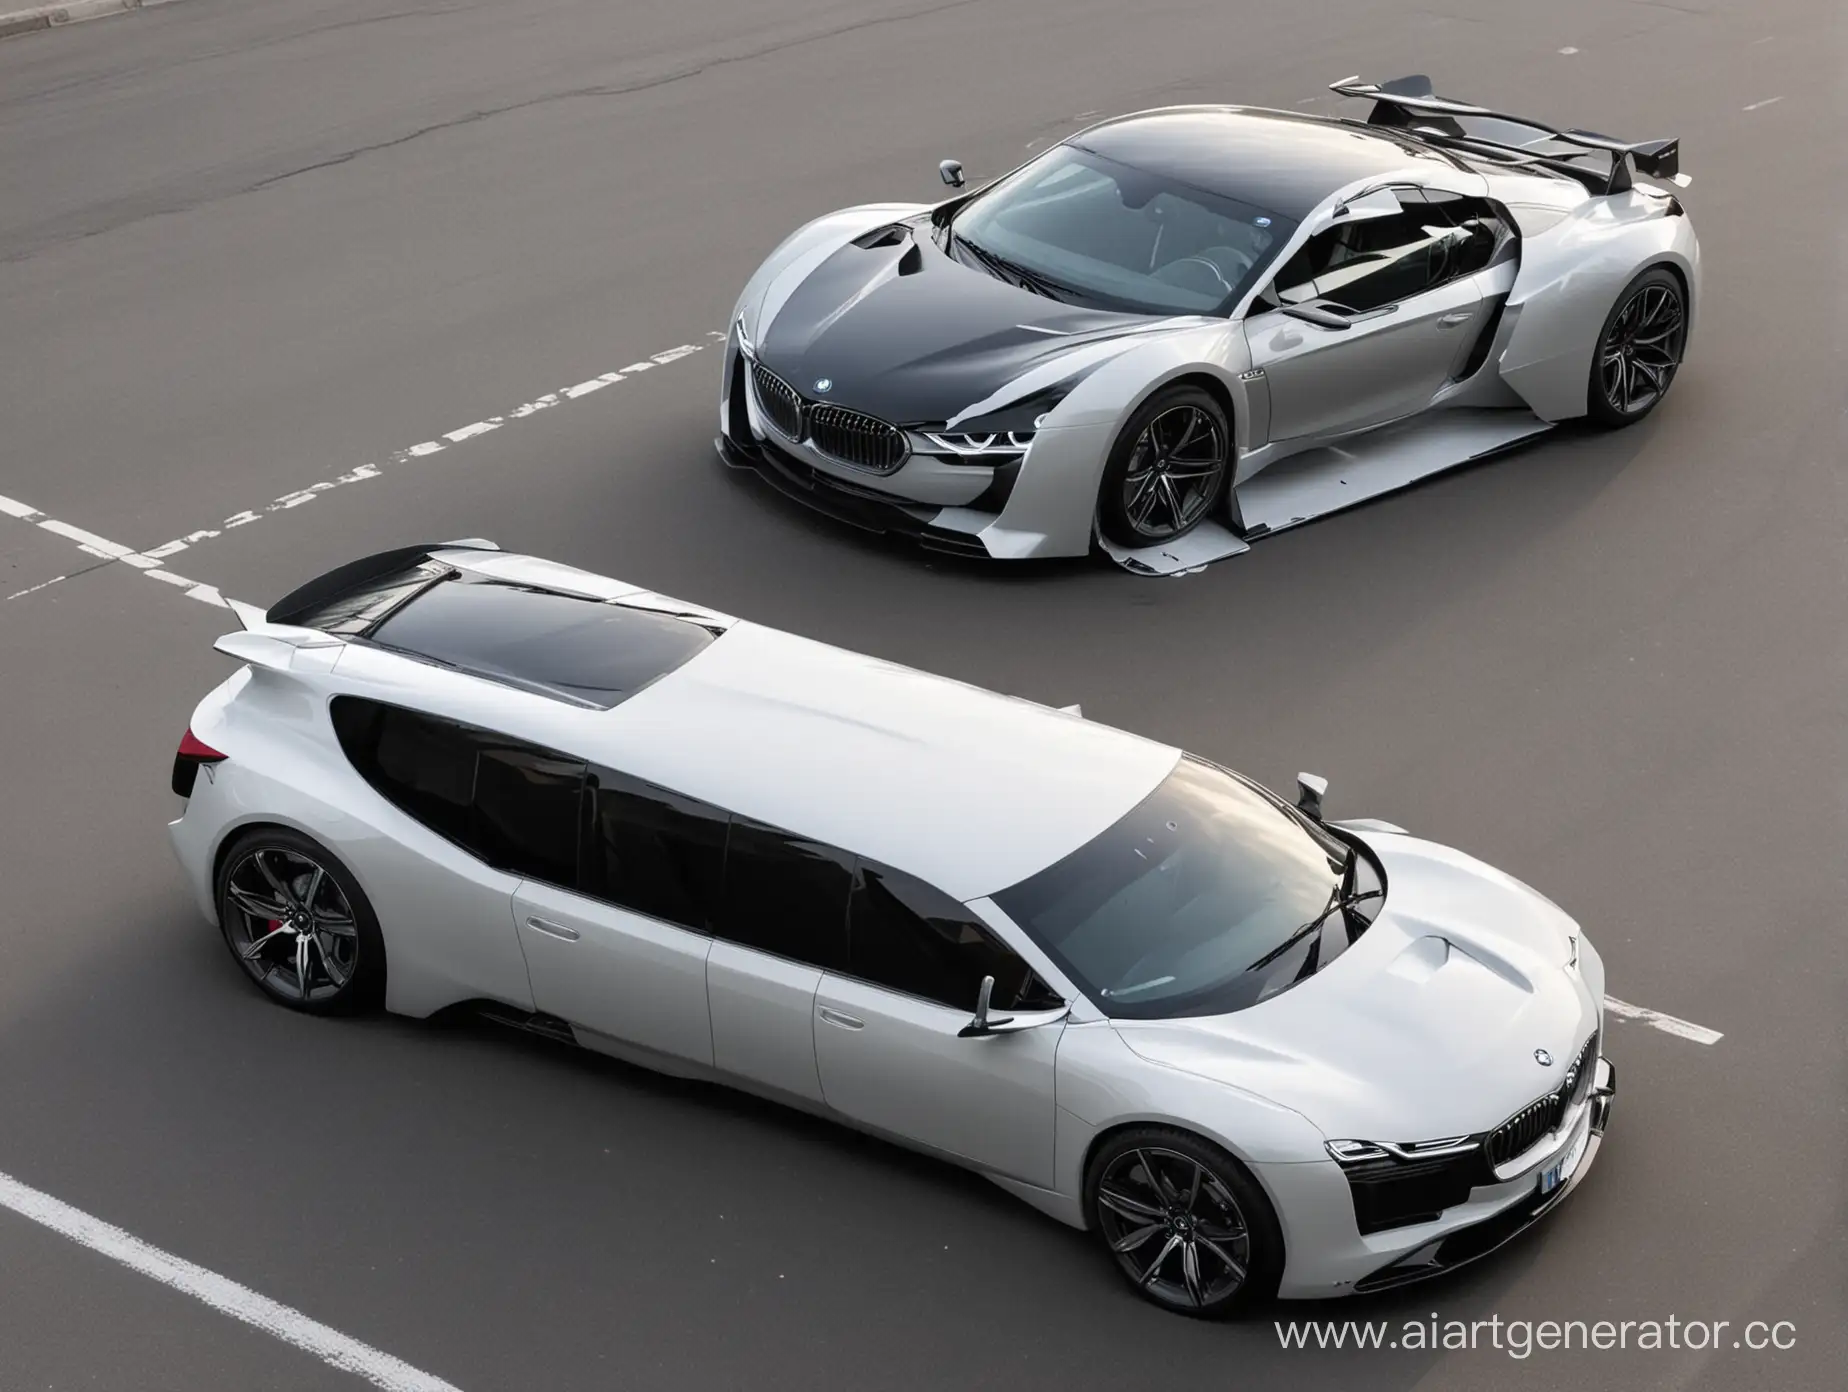 Luxury-German-Car-Trio-BMW-Audi-and-MercedesBenz-Merge-into-One